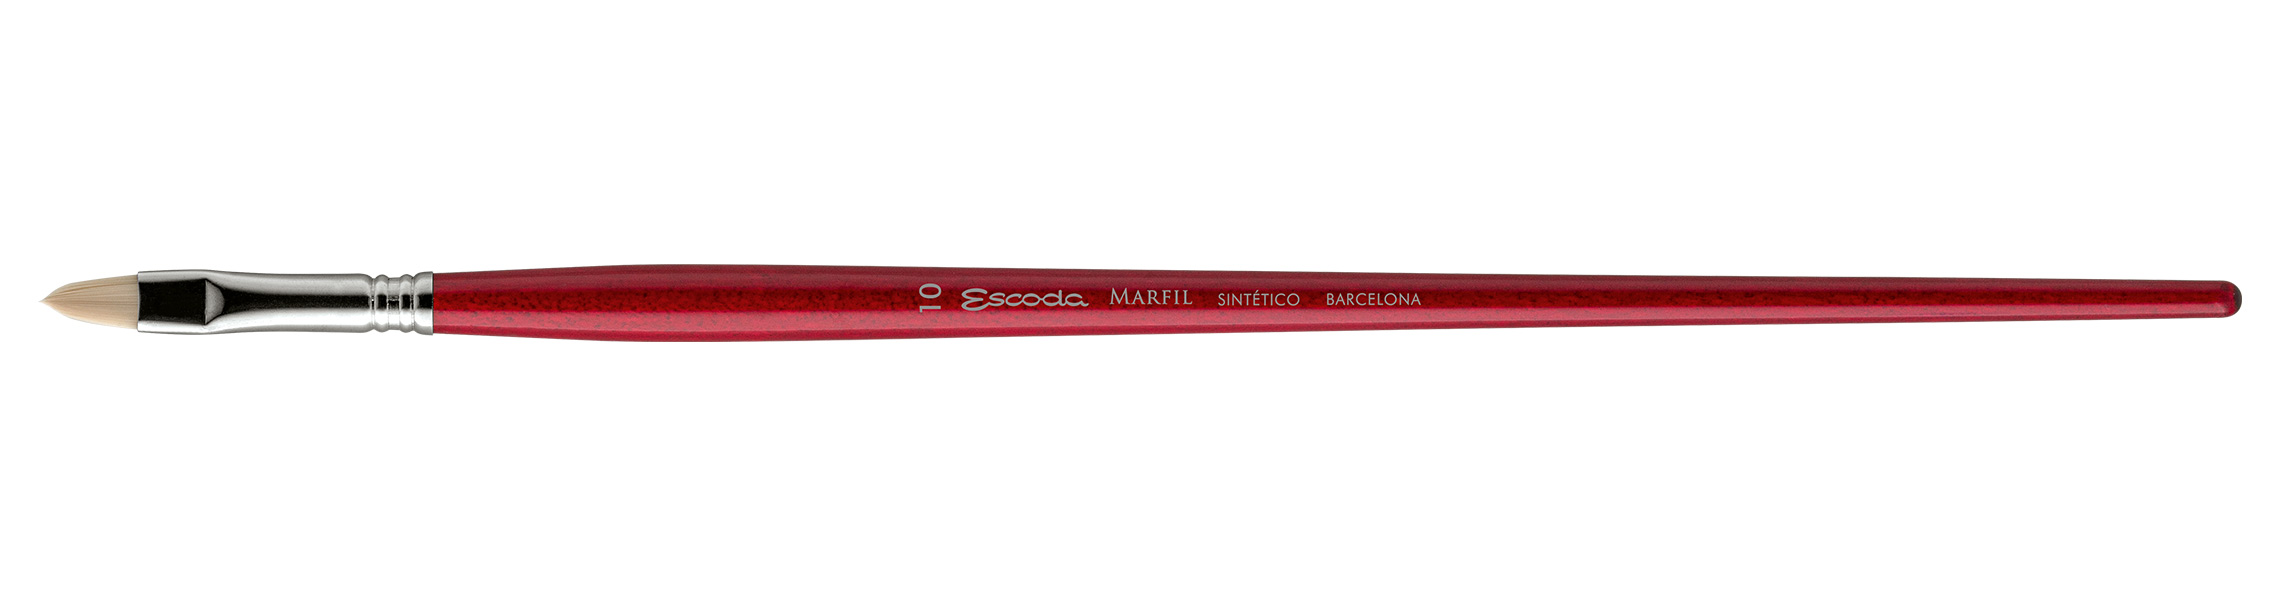 Escoda brushes serie 4460